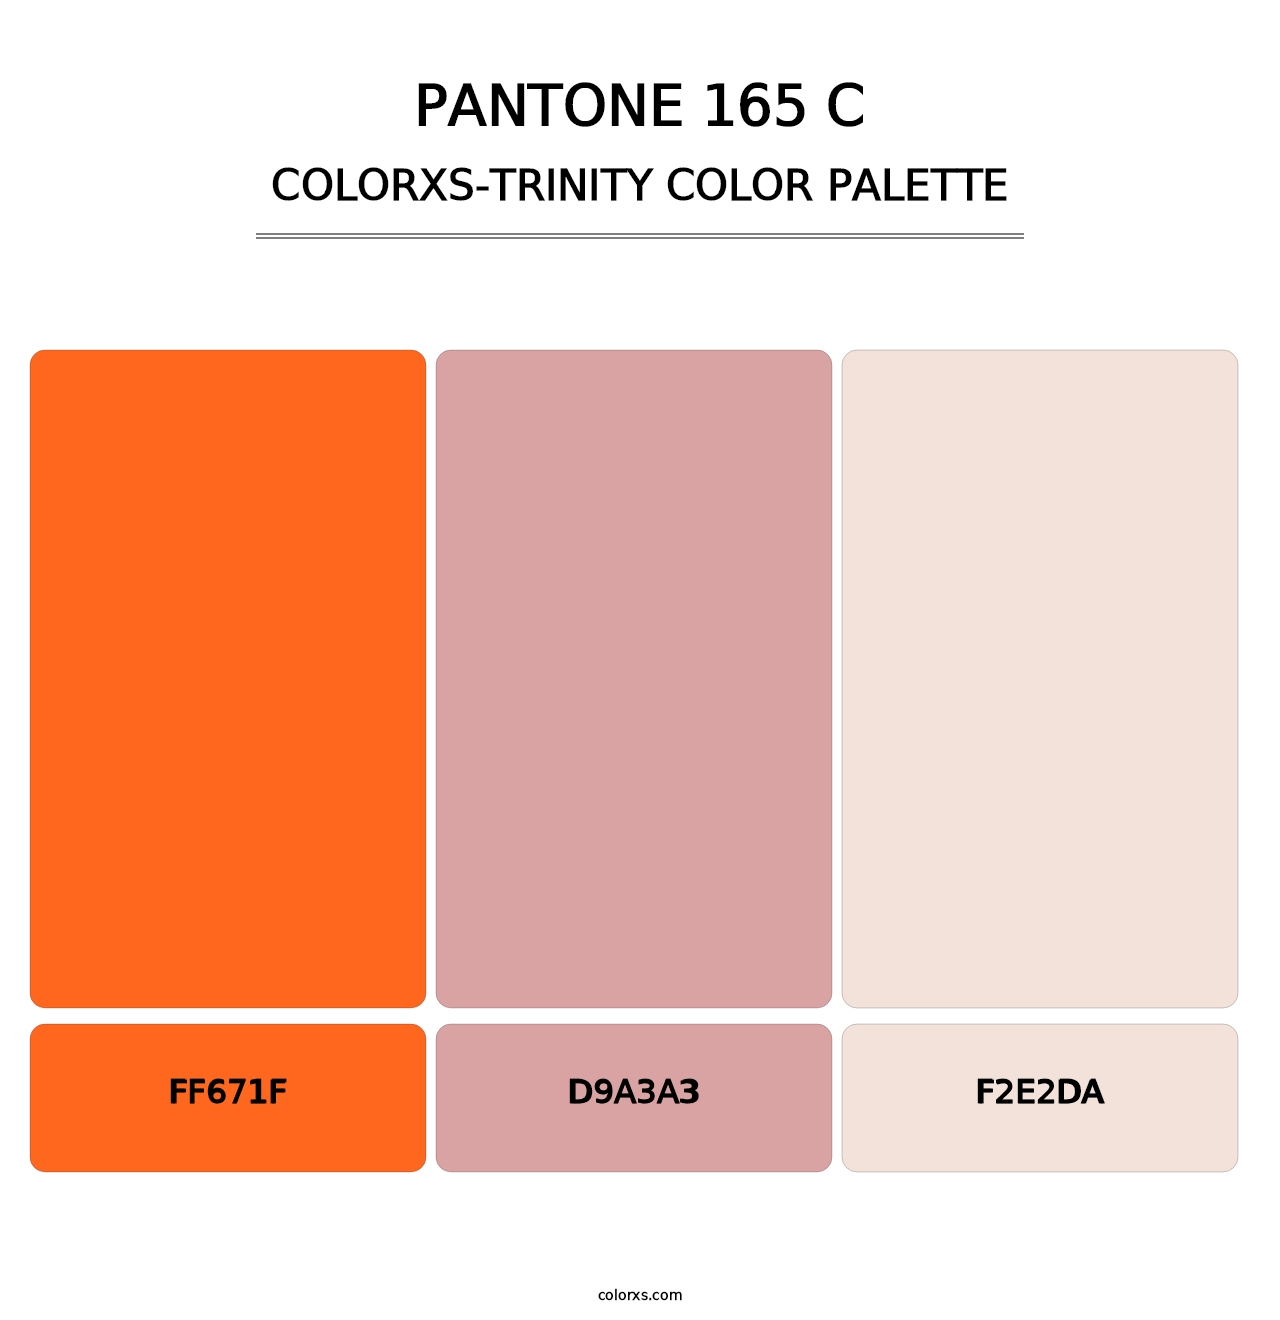 PANTONE 165 C - Colorxs Trinity Palette